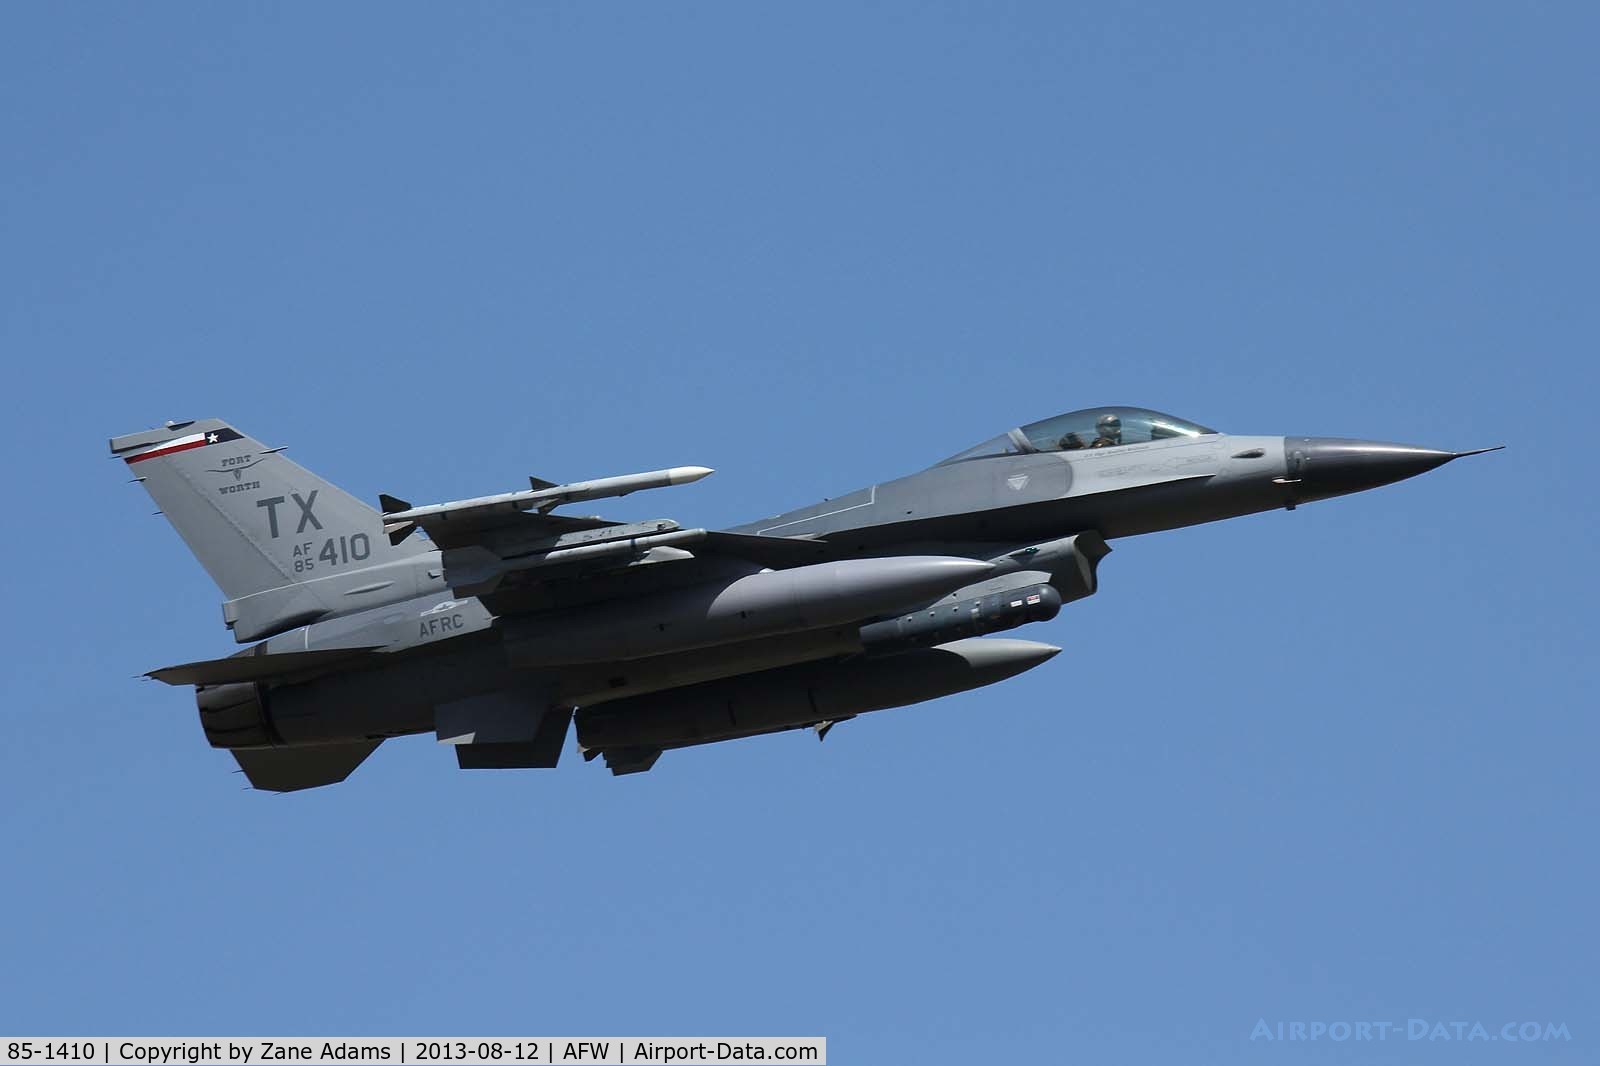 85-1410, 1985 General Dynamics F-16C Fighting Falcon C/N 5C-190, 301st FW F-16 At Alliance Airport - Ft. Worth, TX